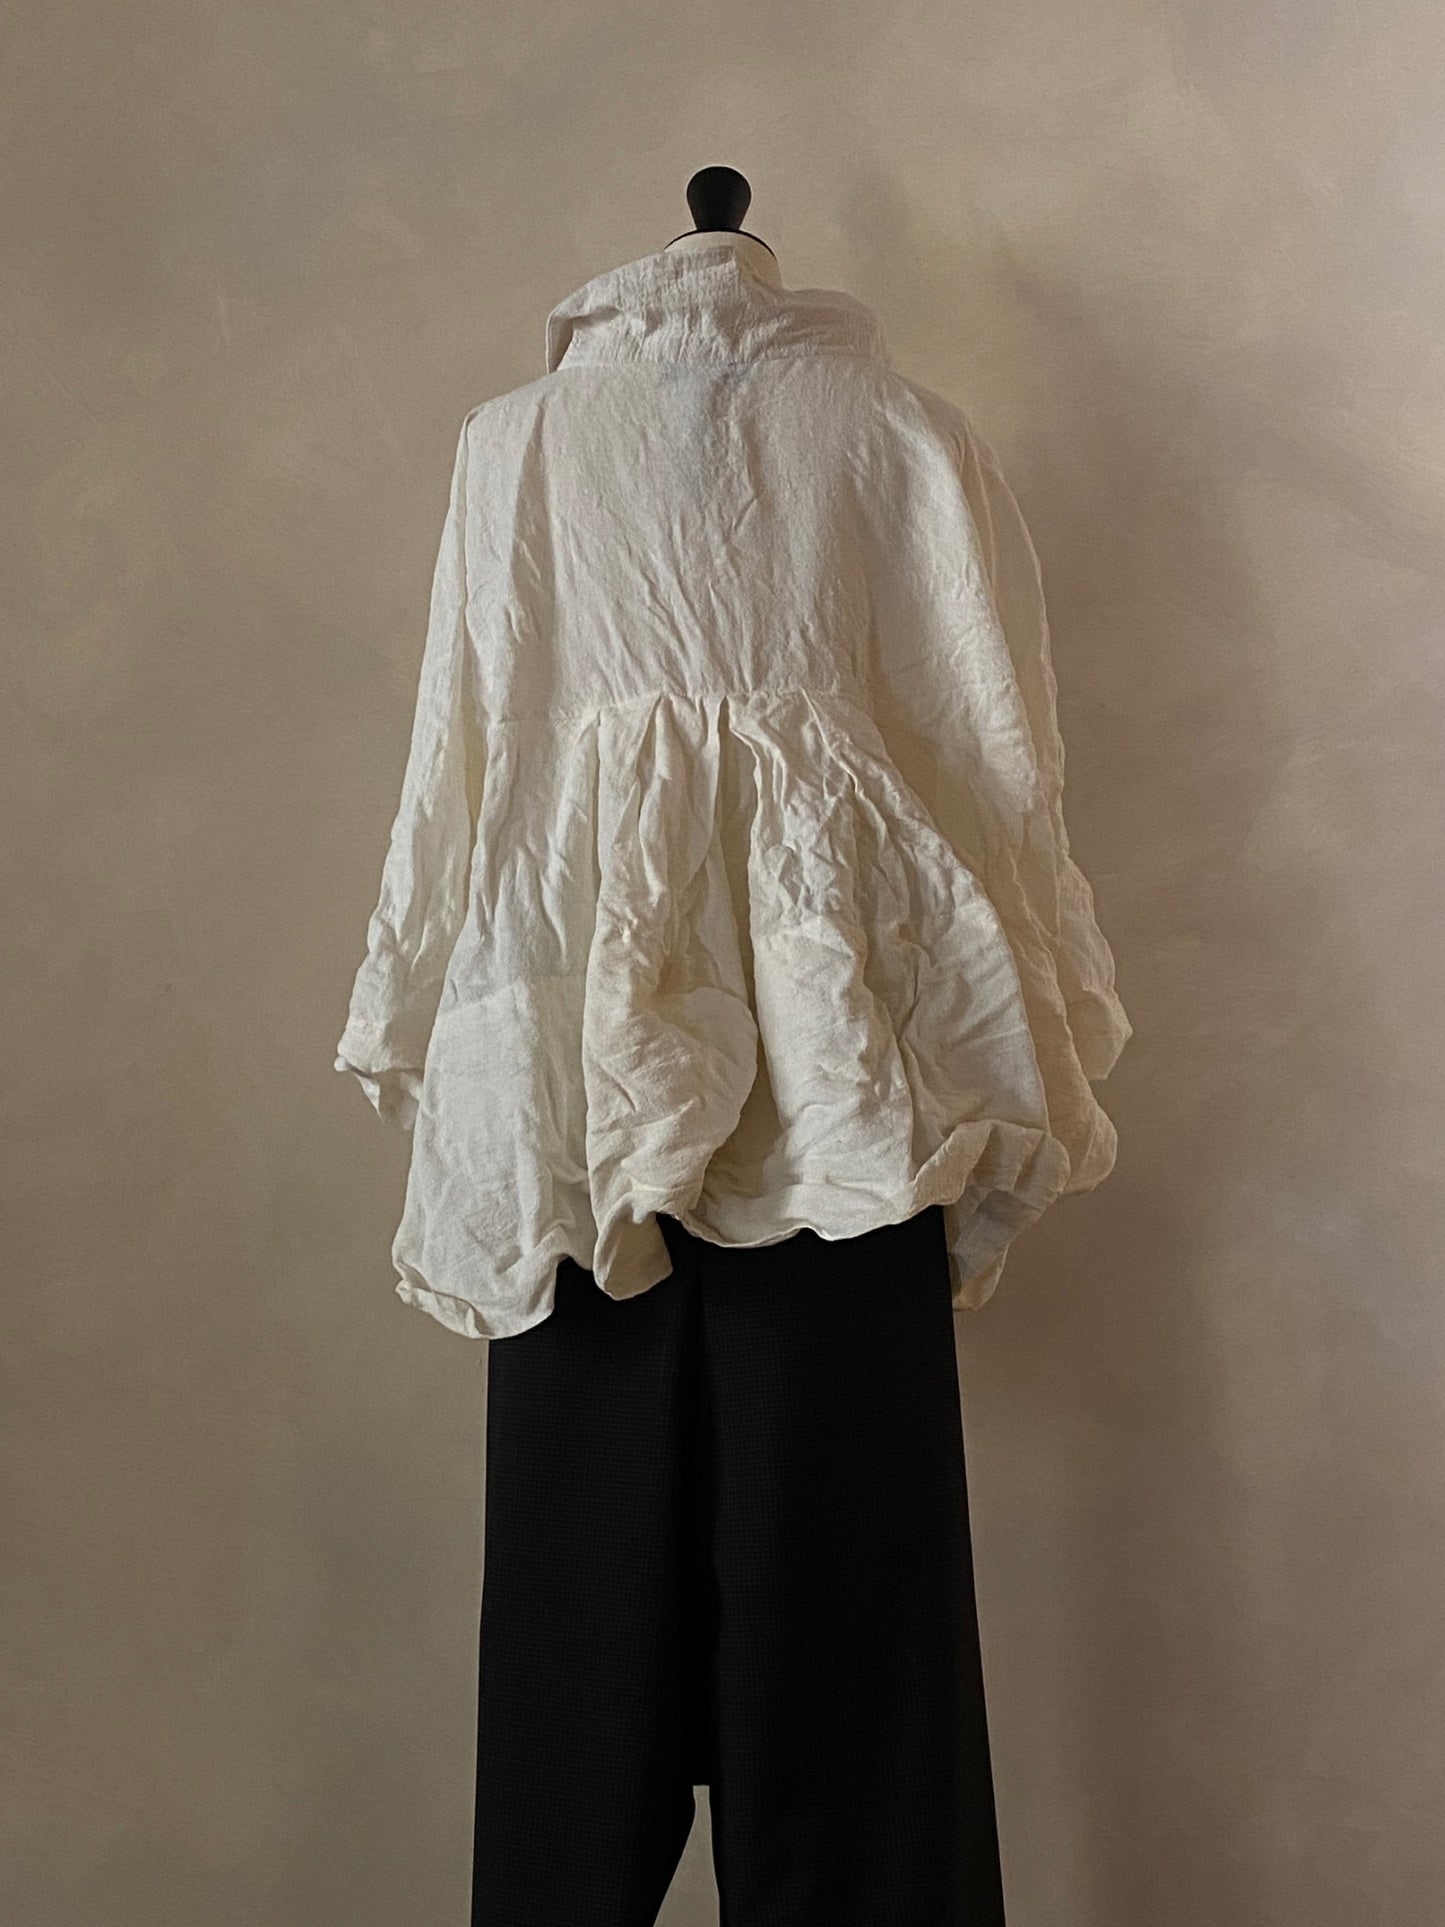 02. White linen shirt